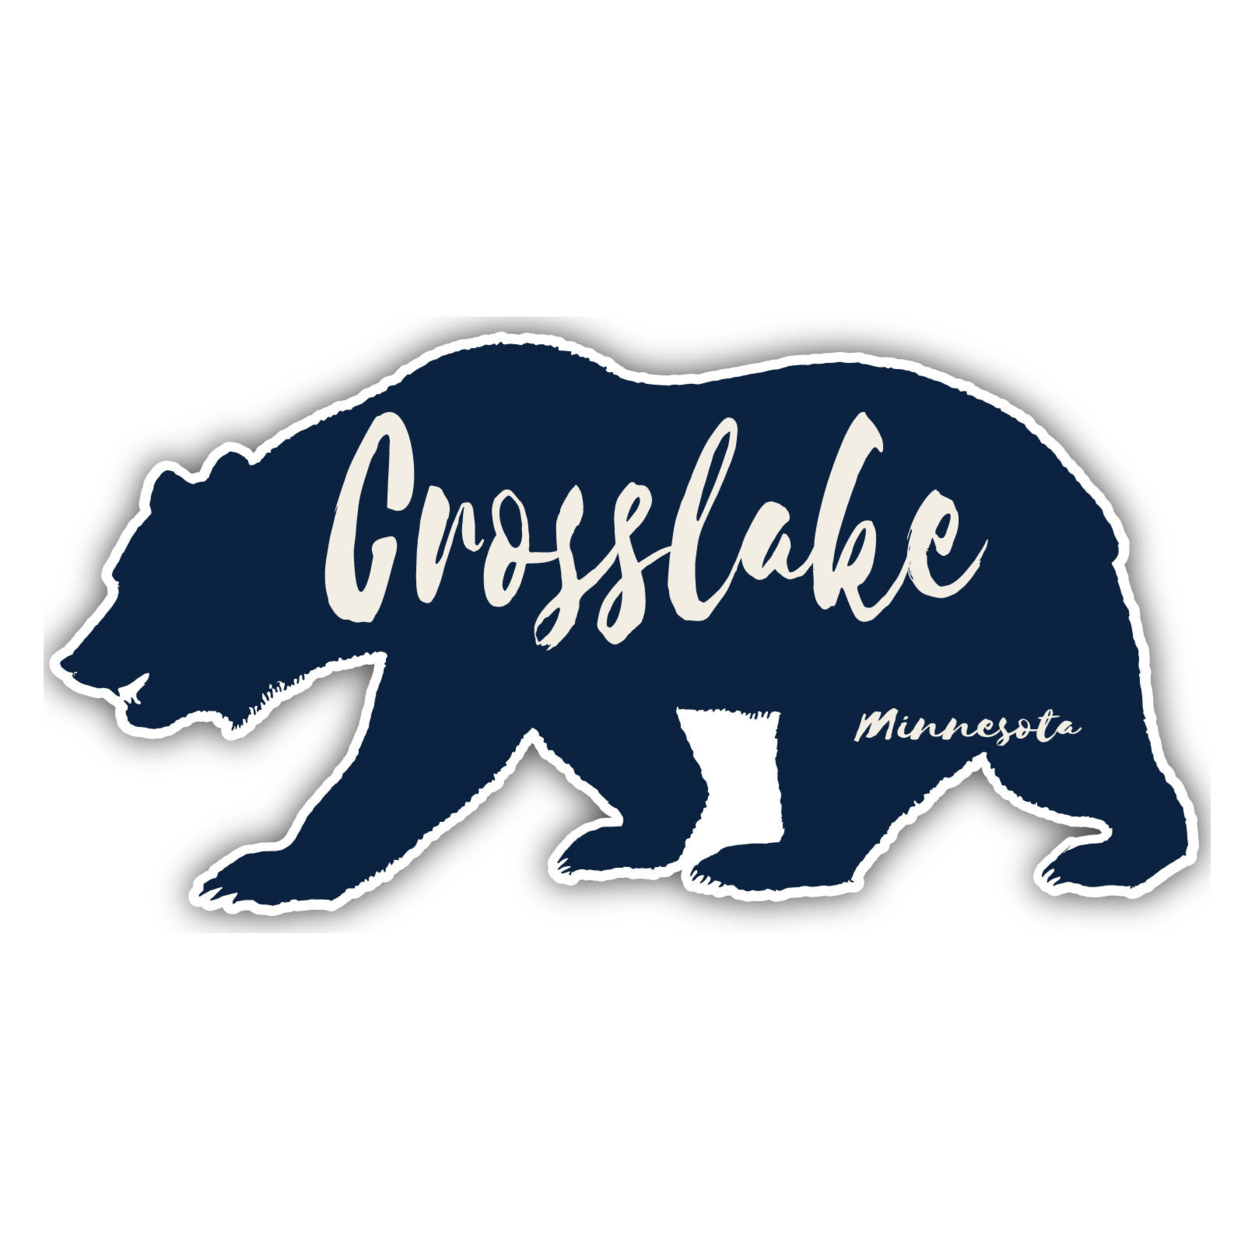 Crosslake Minnesota Souvenir Decorative Stickers (Choose Theme And Size) - Single Unit, 2-Inch, Bear